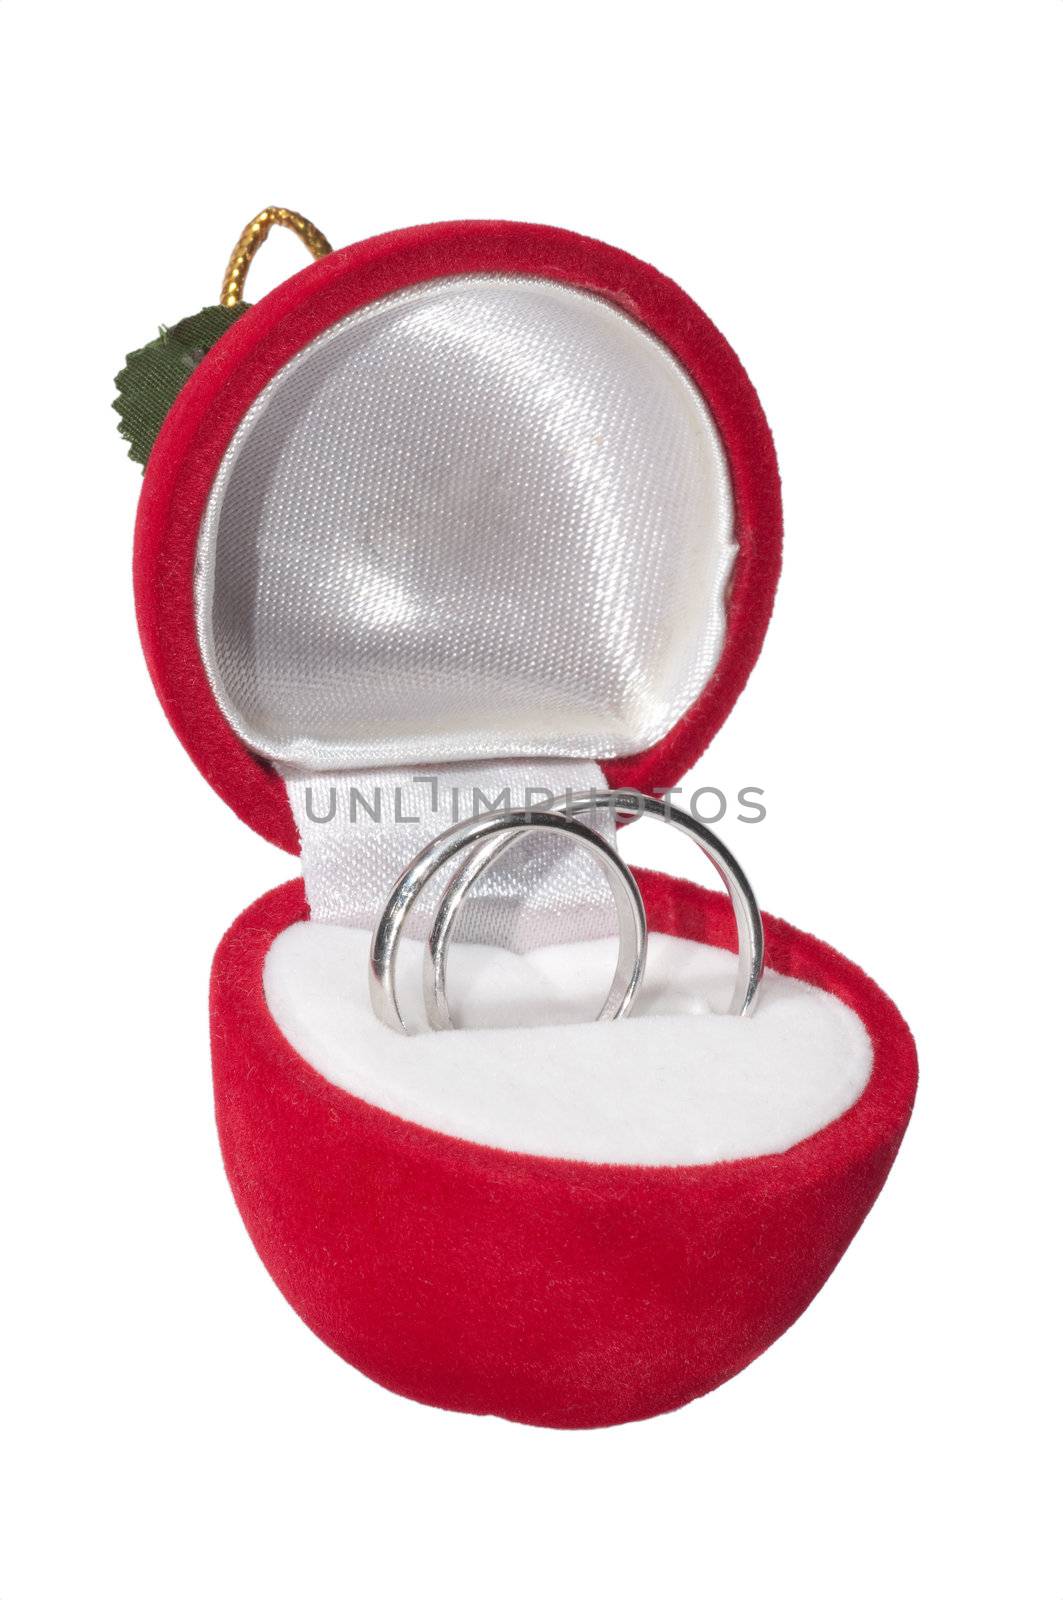 Wedding rings in velvet box by Erchog